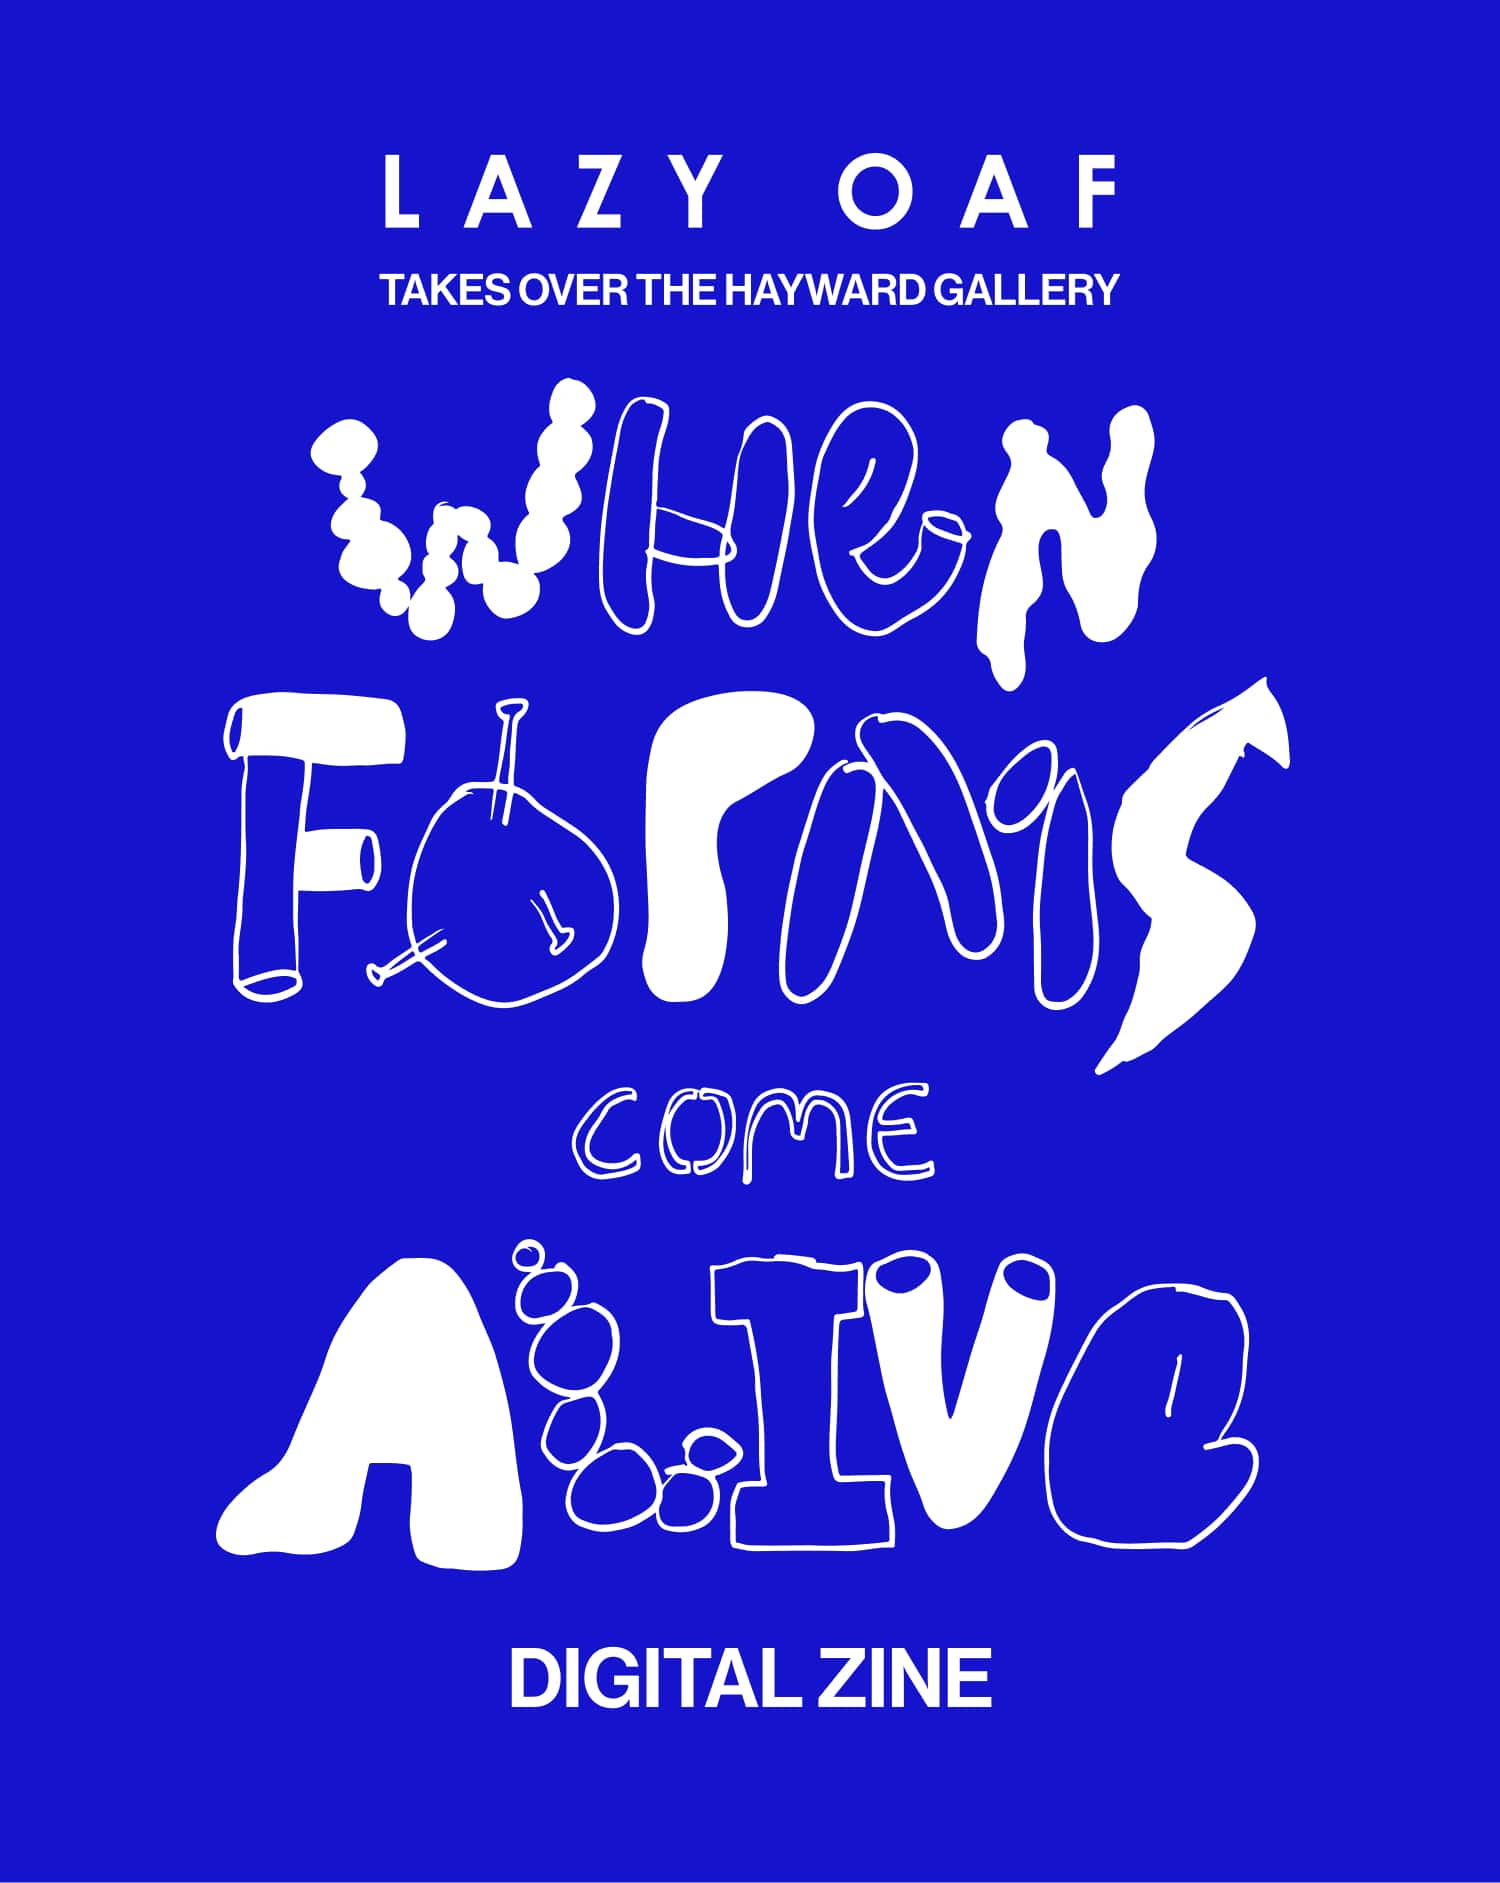 When Forms Come Alive: Digital Zine